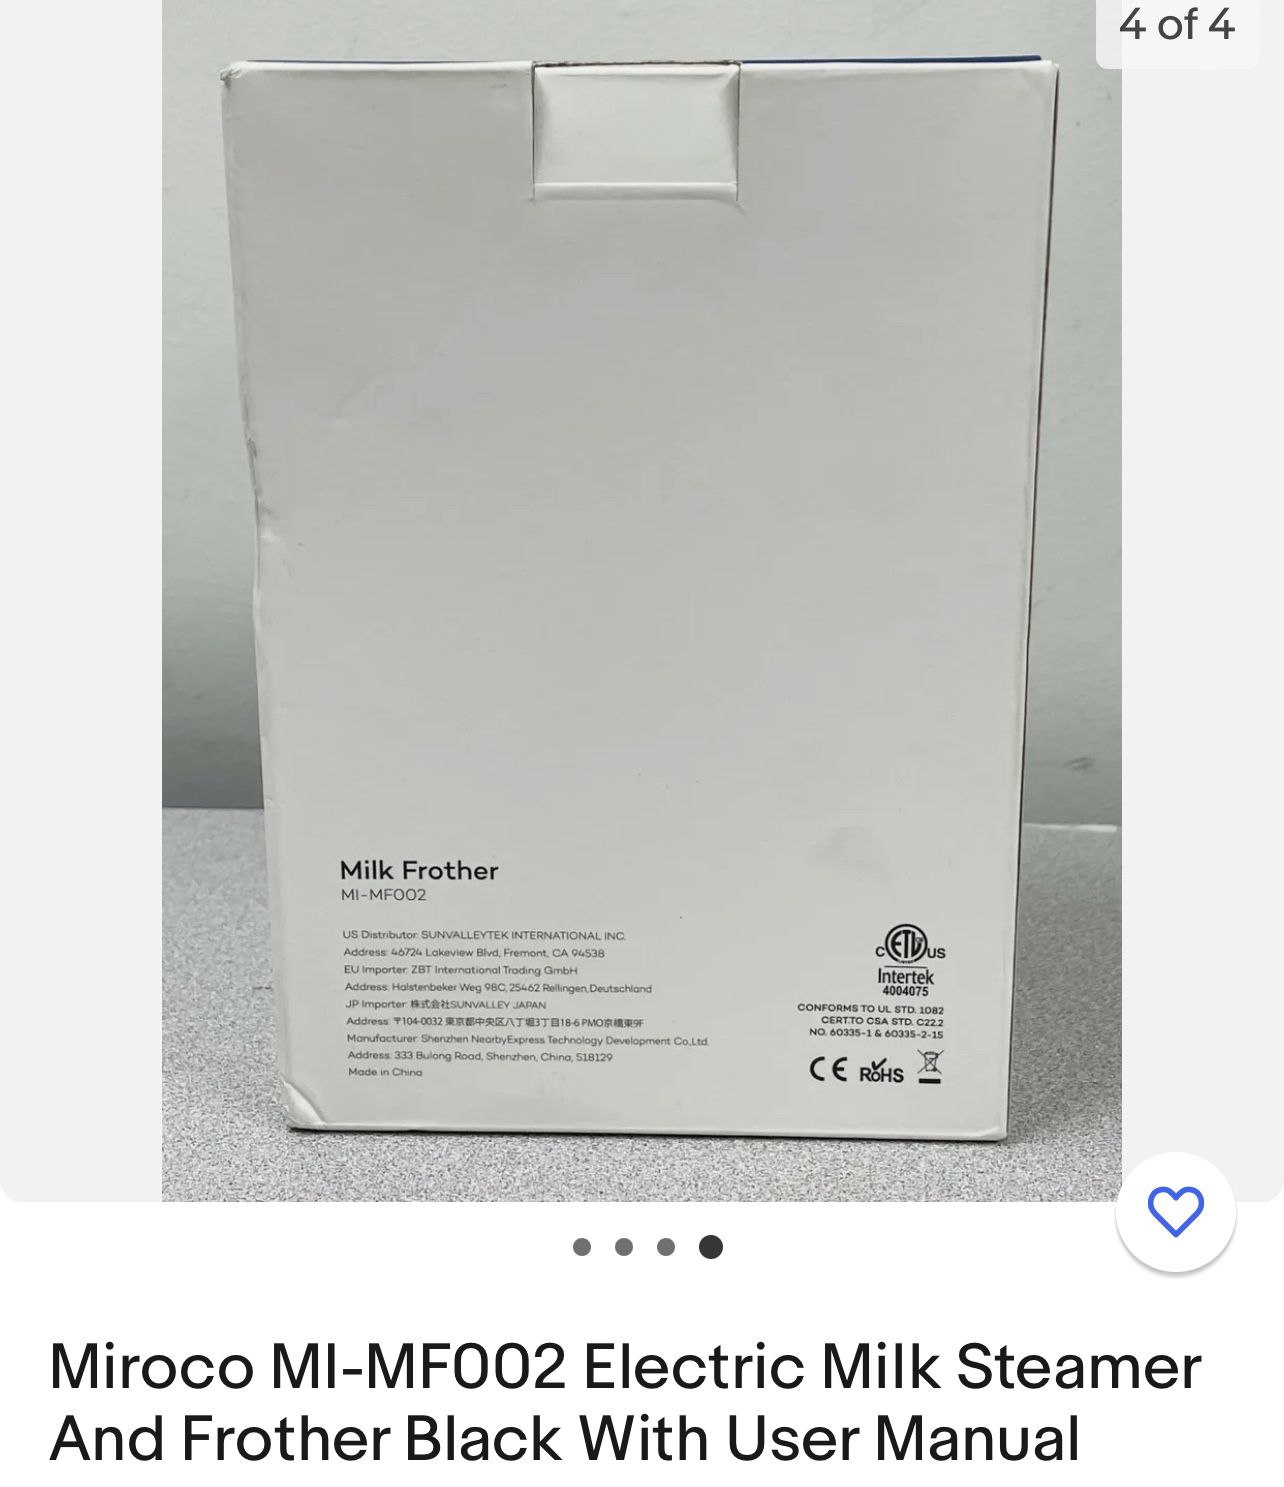 Miroco Milk Frother MI-MF002 Electric Milk Steamer In Box - Milk